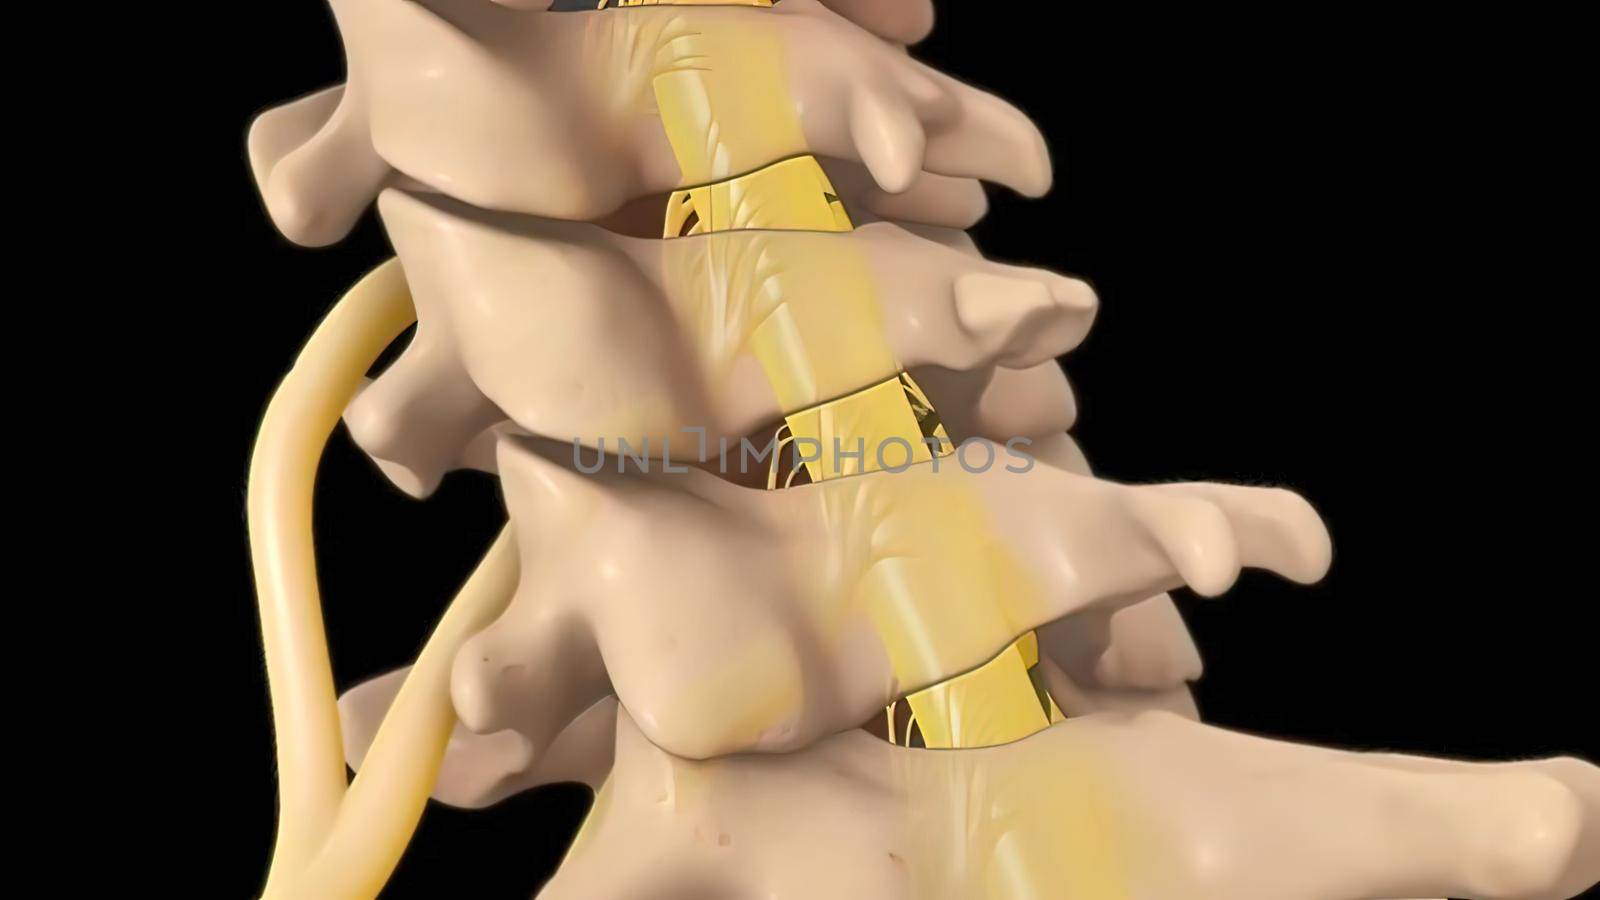 Anatomical view of the cervical spine with intervertebral disc-compressive nerve root prolapse. 3D illustration